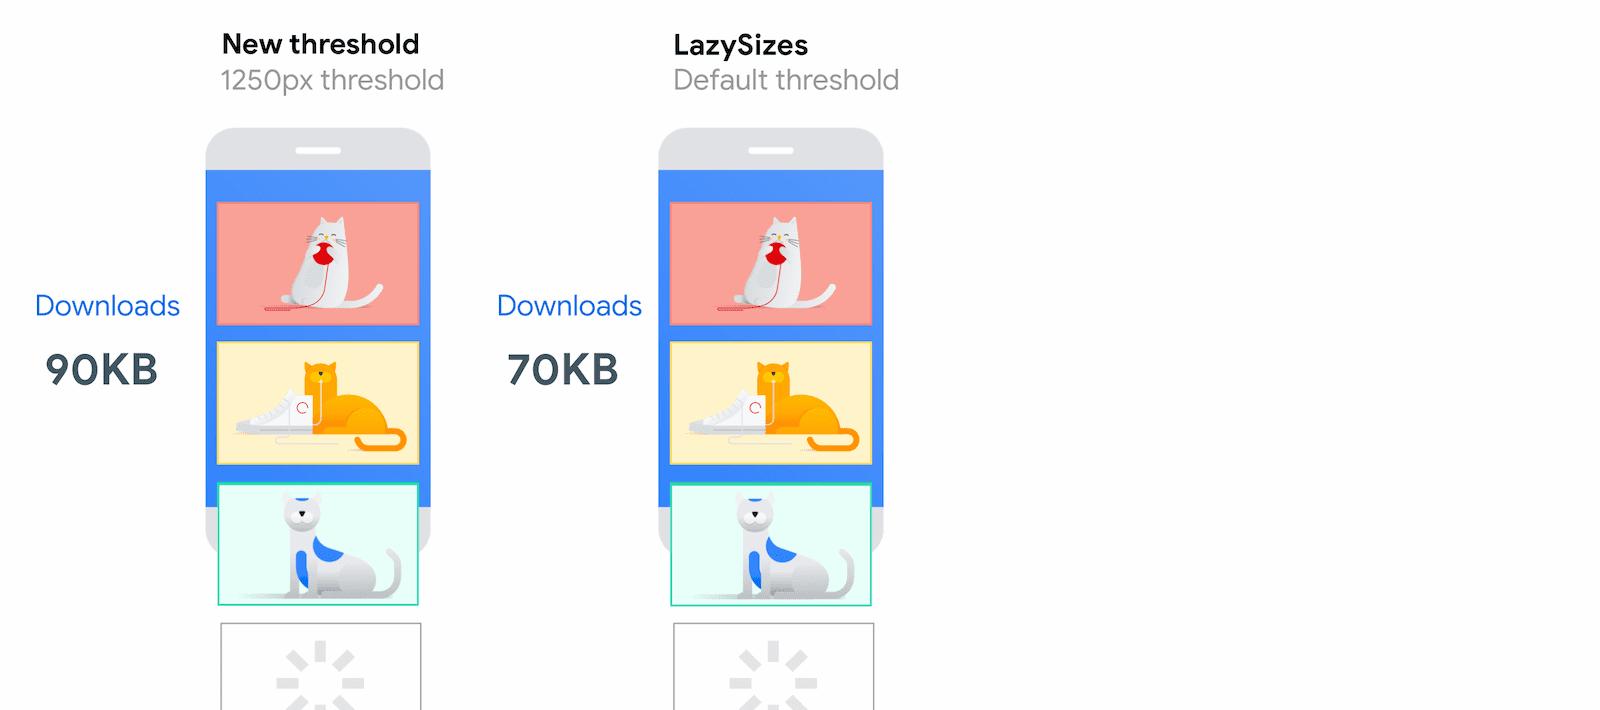 Vergleich Native Lazy Loading und LazySizes